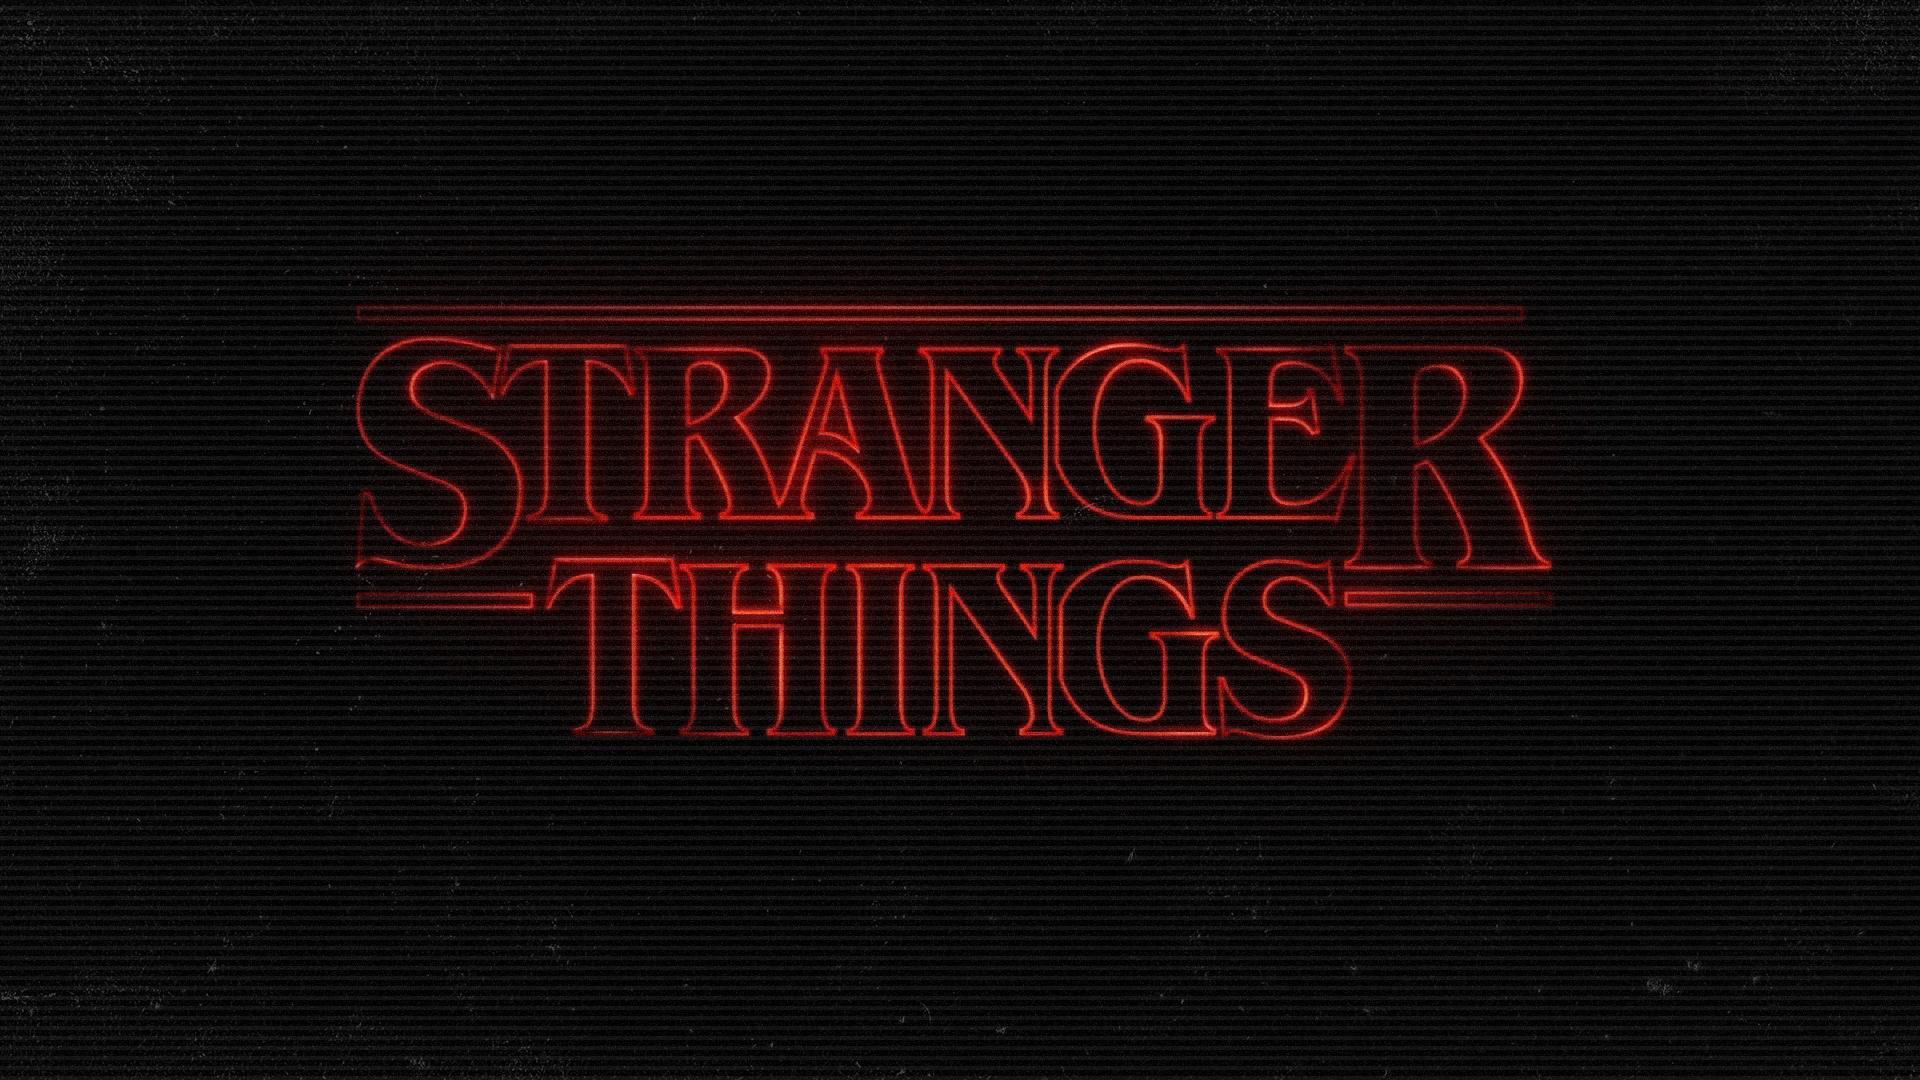 Stranger Things Logo Wallpaper 56292 1920x1080px